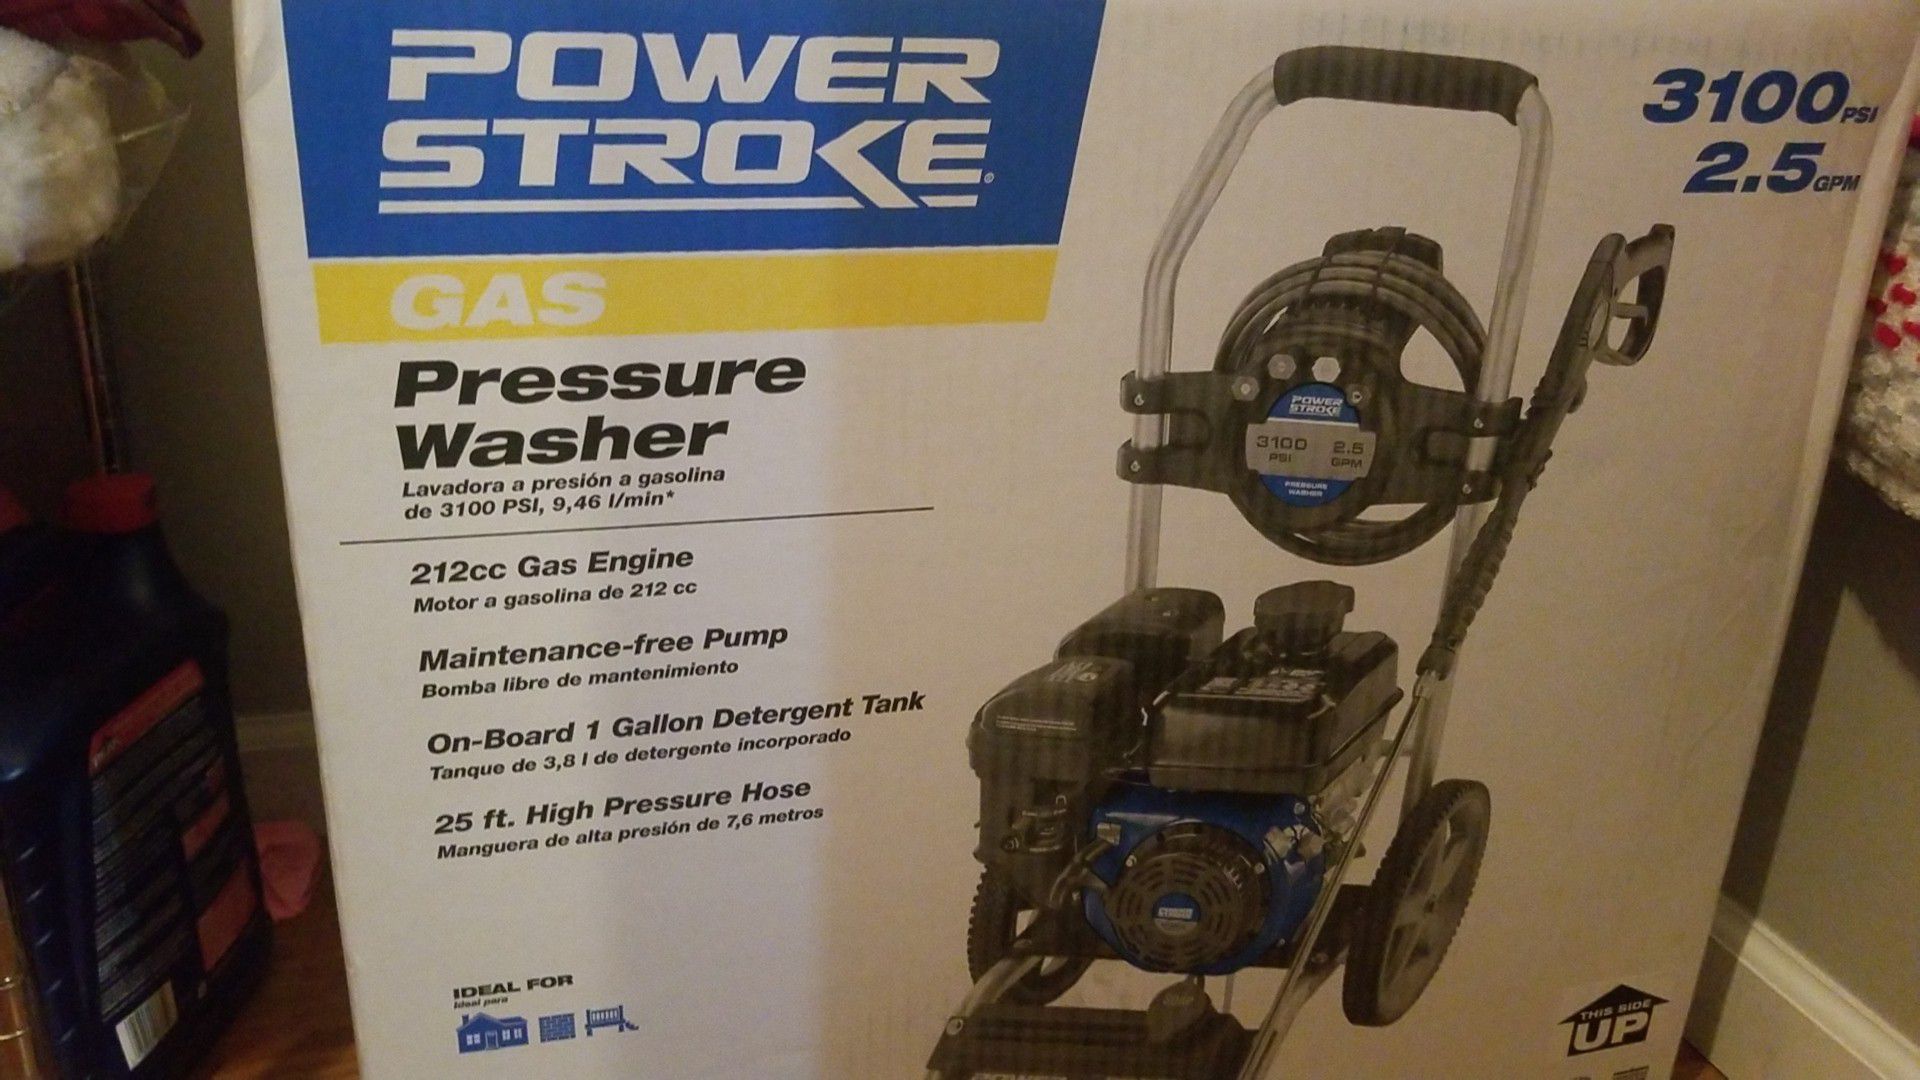 Power stroke pressure washer